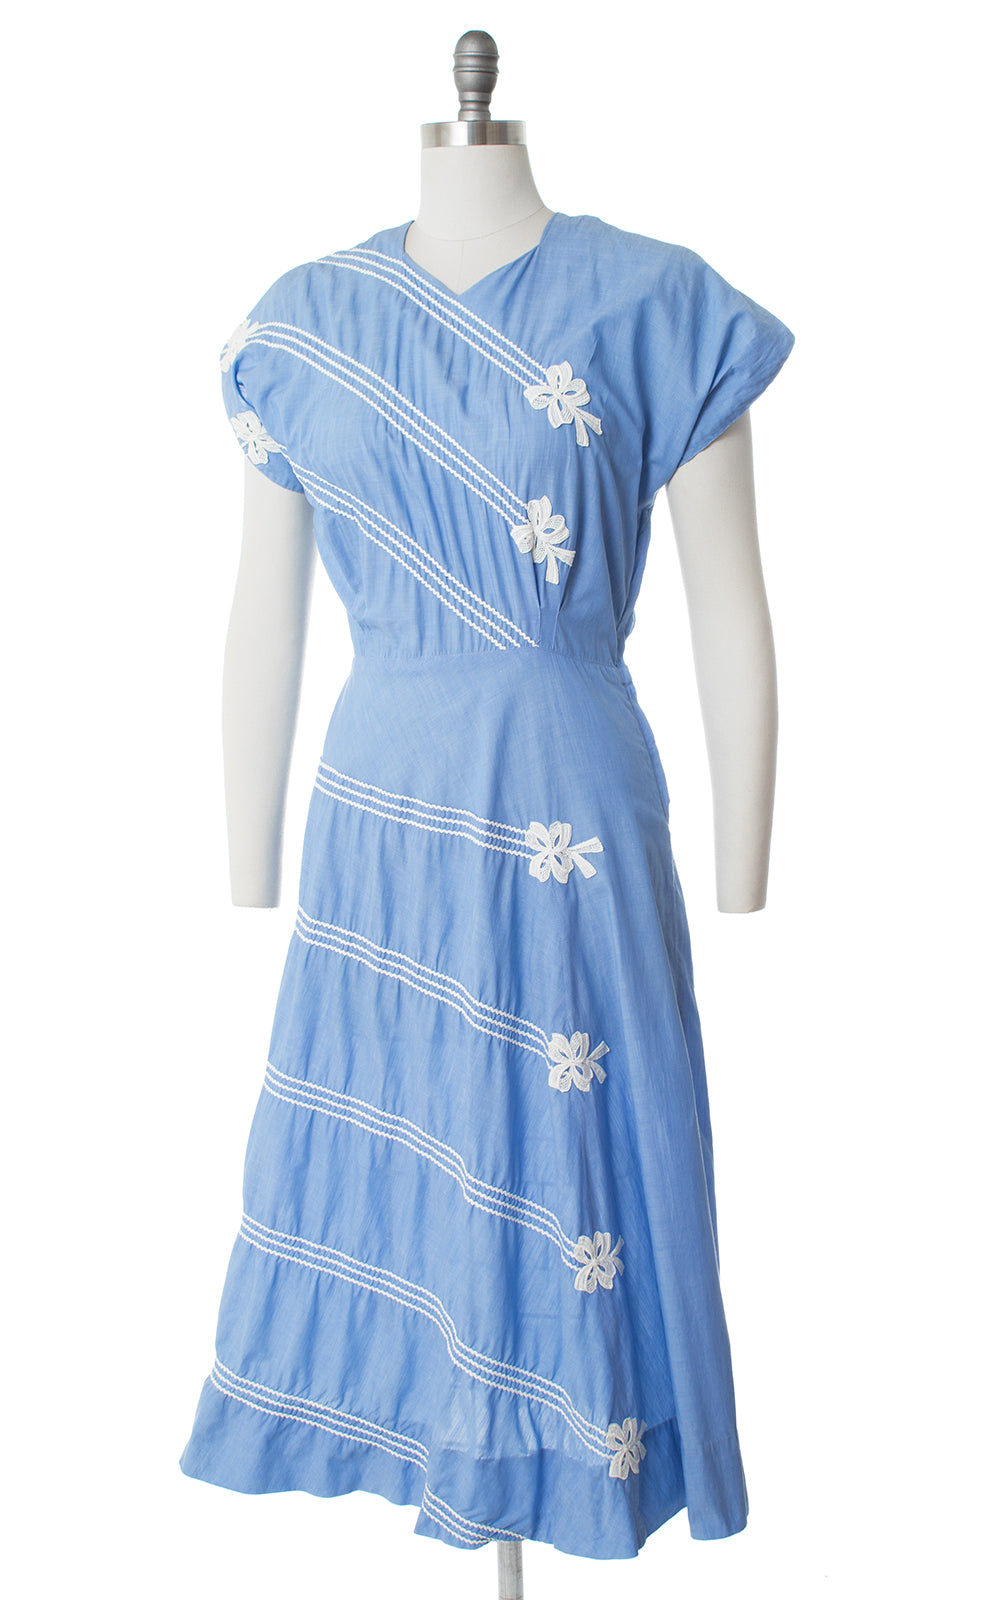 1950s Bow Striped Cotton Dress